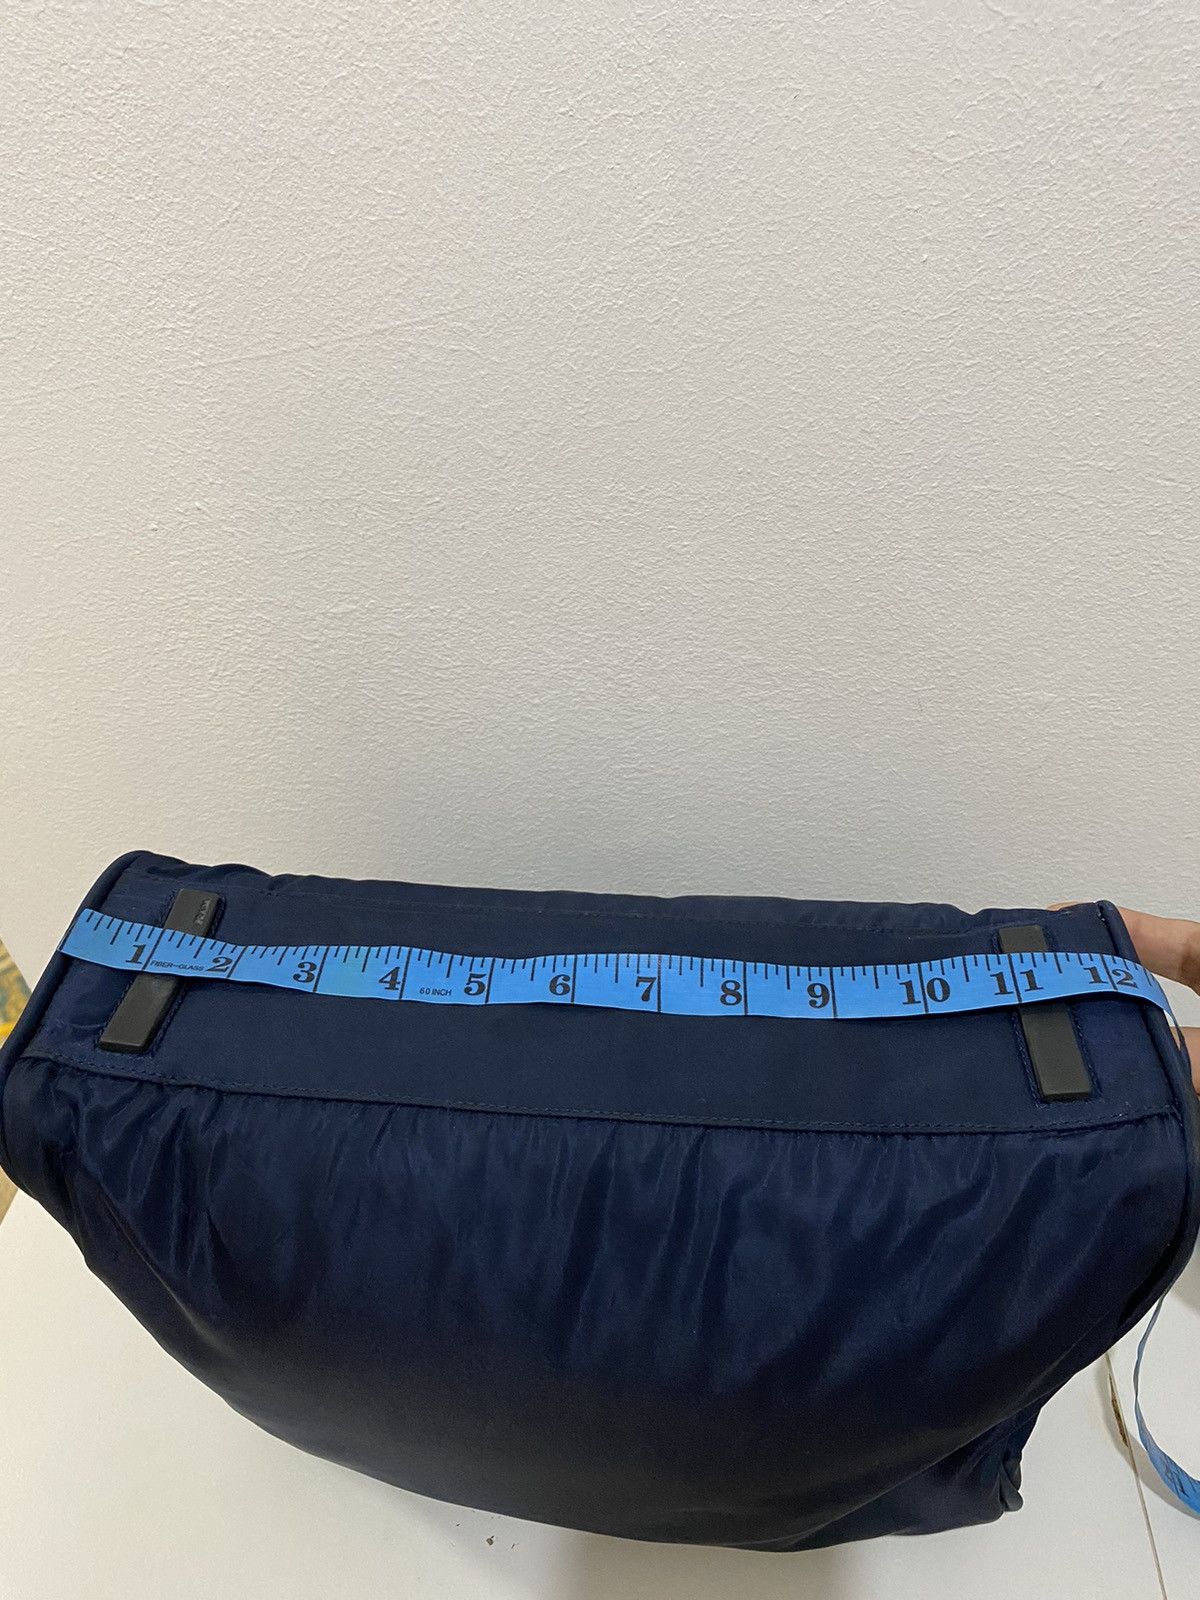 Prada Tessuto Nylon Navy Blue Handbag - 11